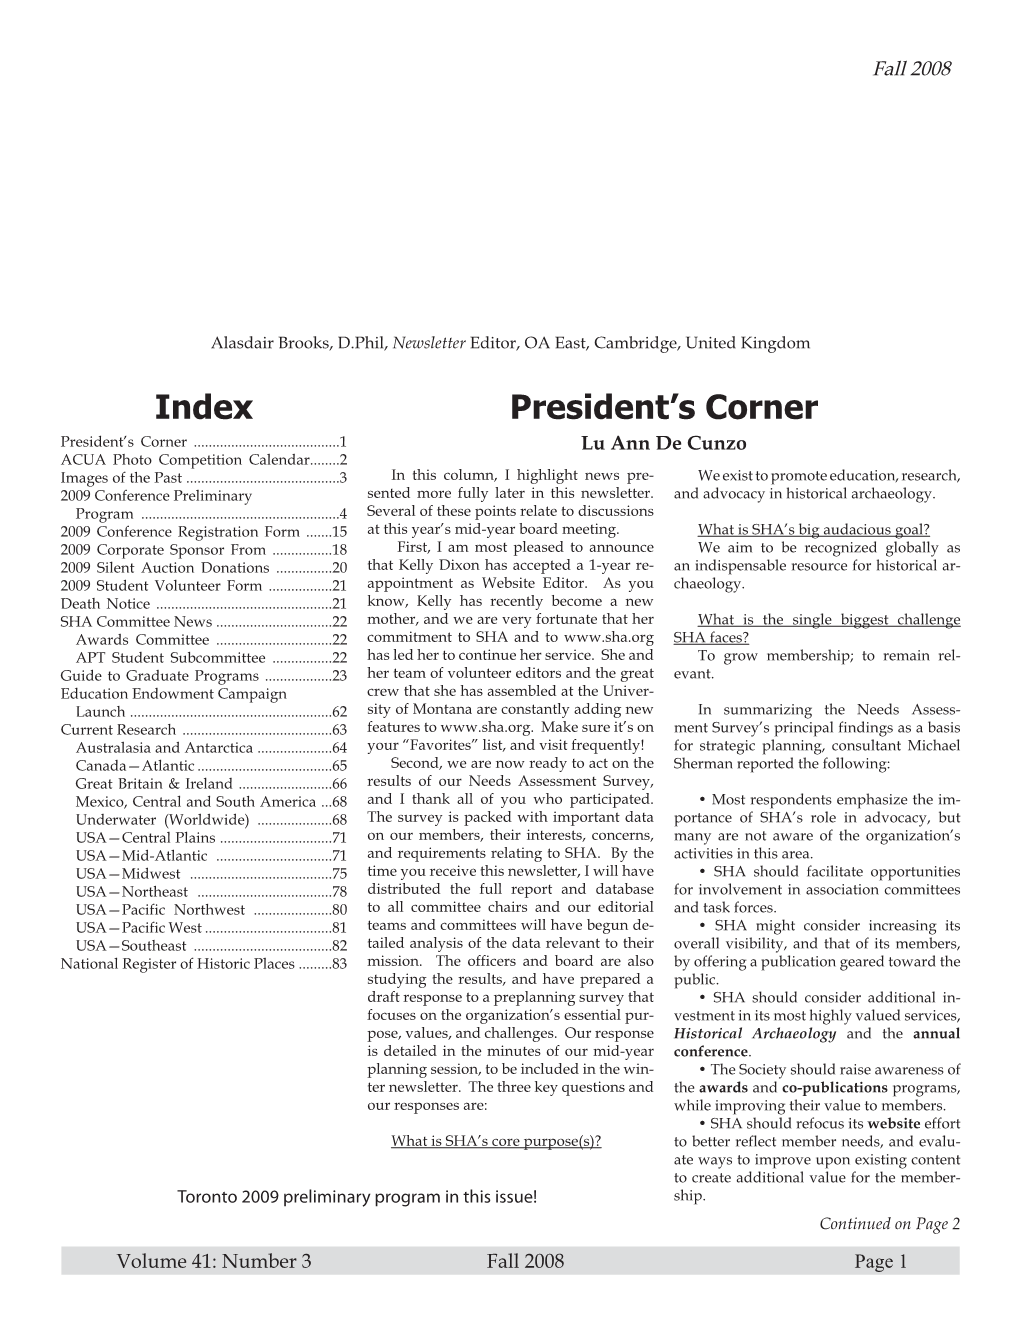 Index President's Corner